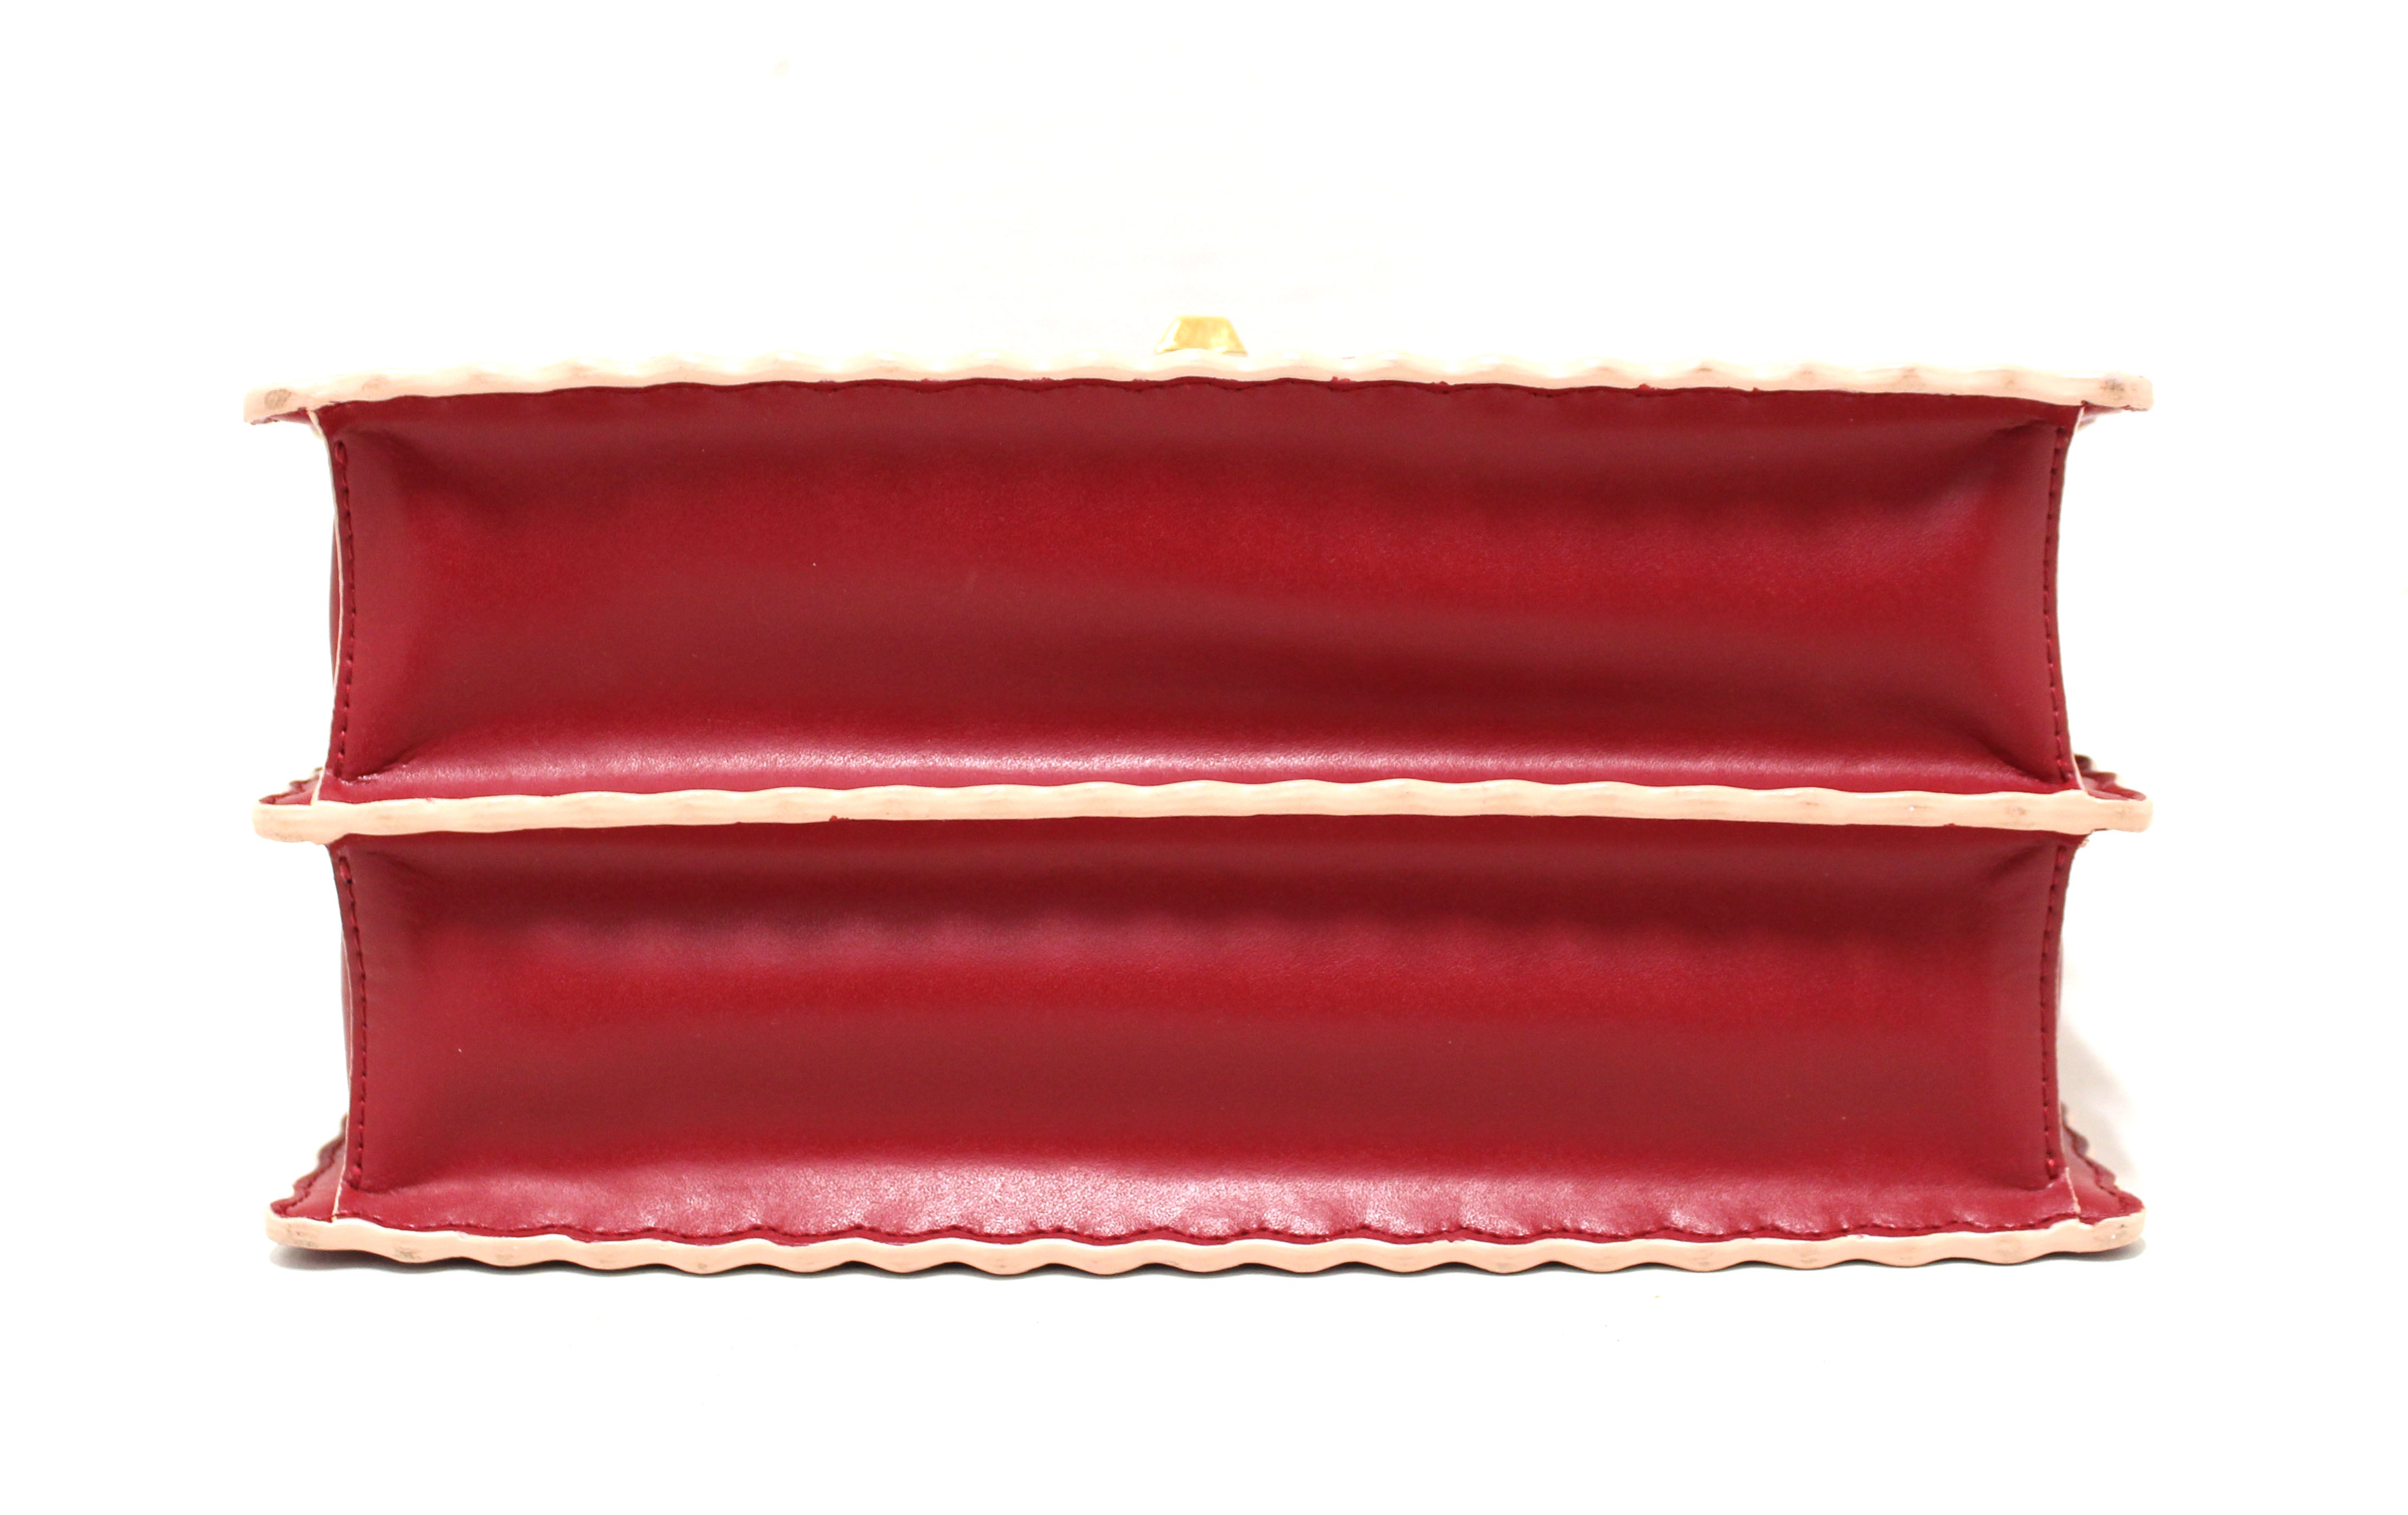 Authentic Fendi Red Leather Mini I Kan Chain Shoulder Bag